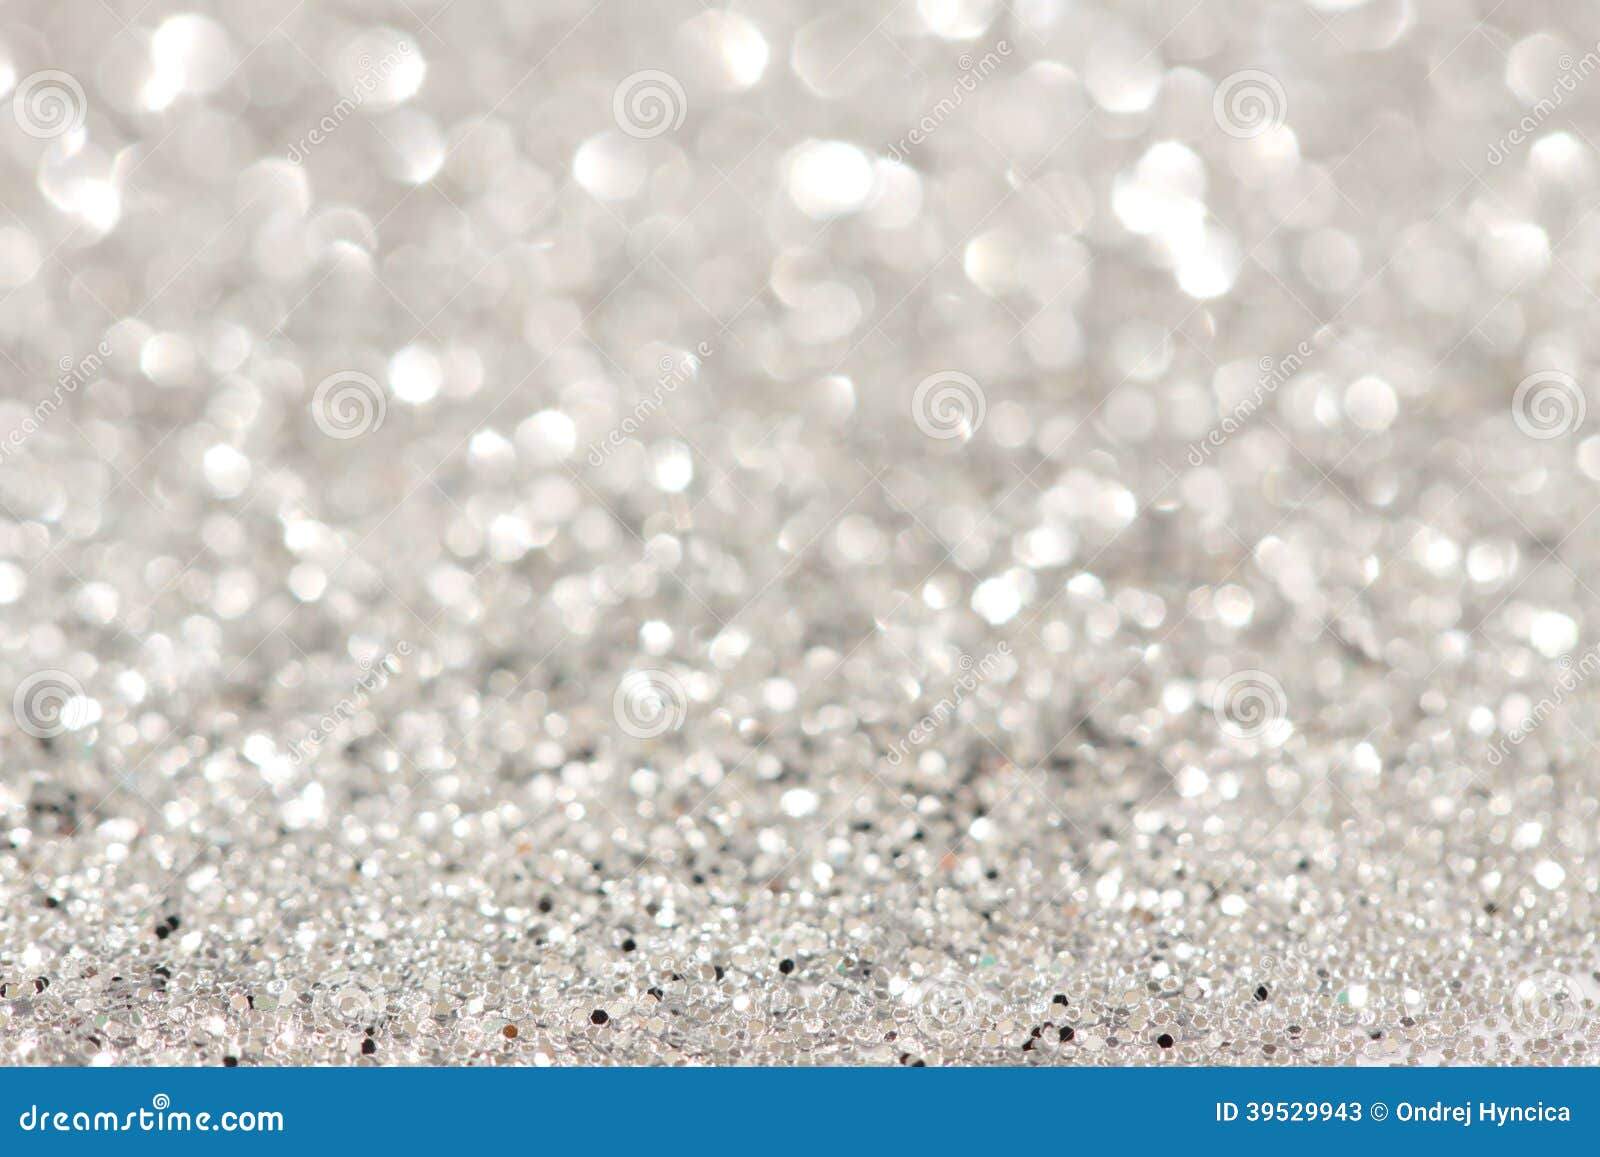 Silver sparkle background stock image. Image of seasonal - 39529943